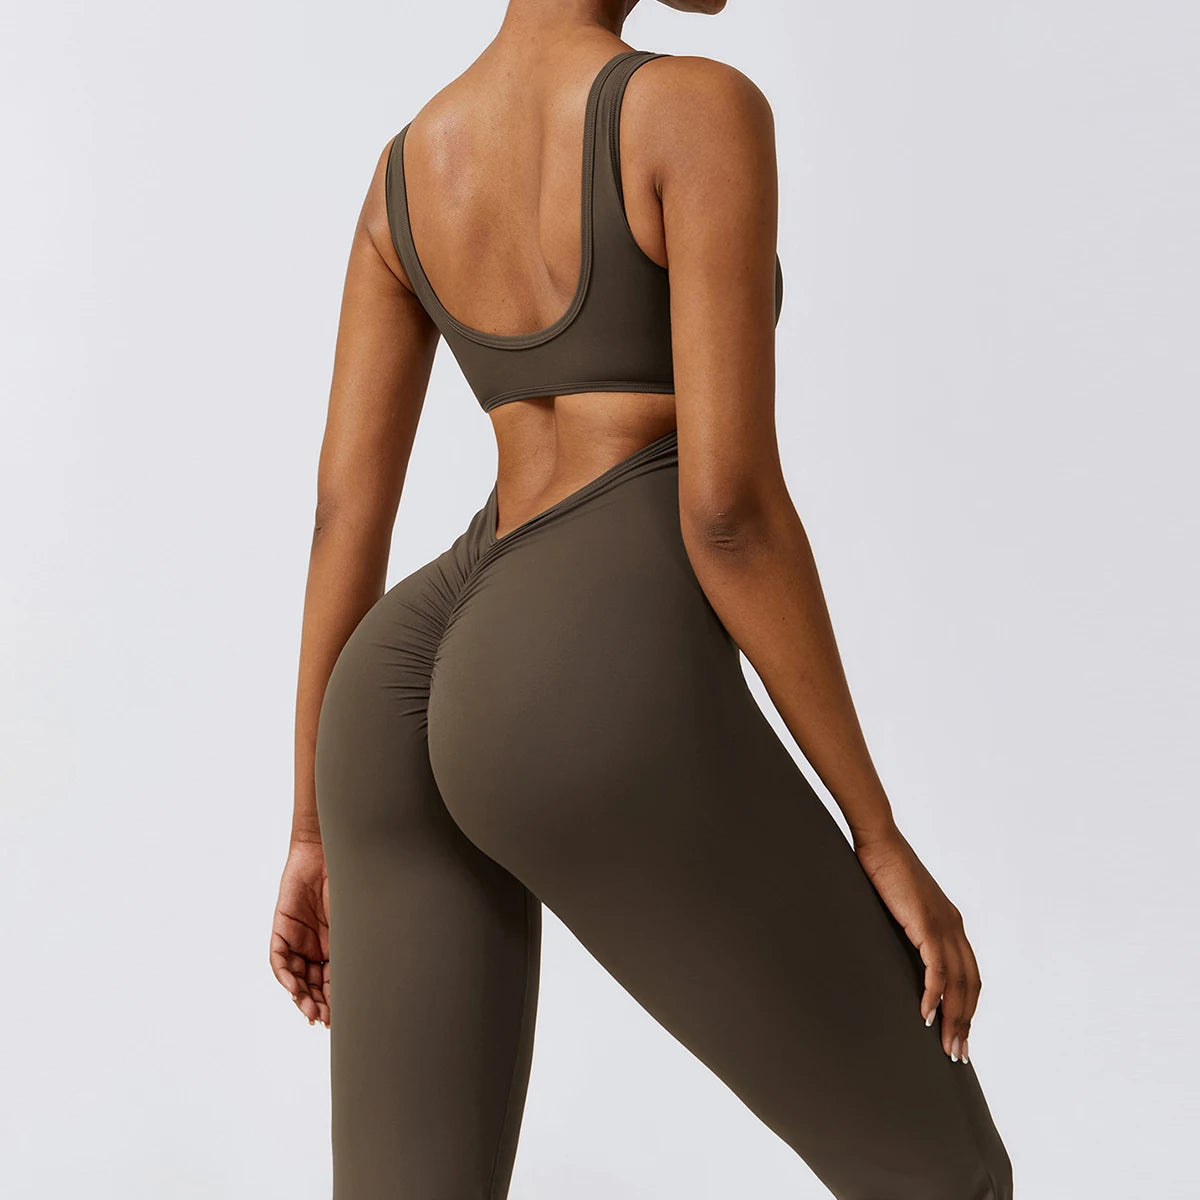 Seksi hrbtni kombinezon v obliki črke V Gym Set Ženska obleka za jogo za trening Športna oblačila Ženski športni kombinezon Fitnes Rompers Stretch Workout Bodysuits